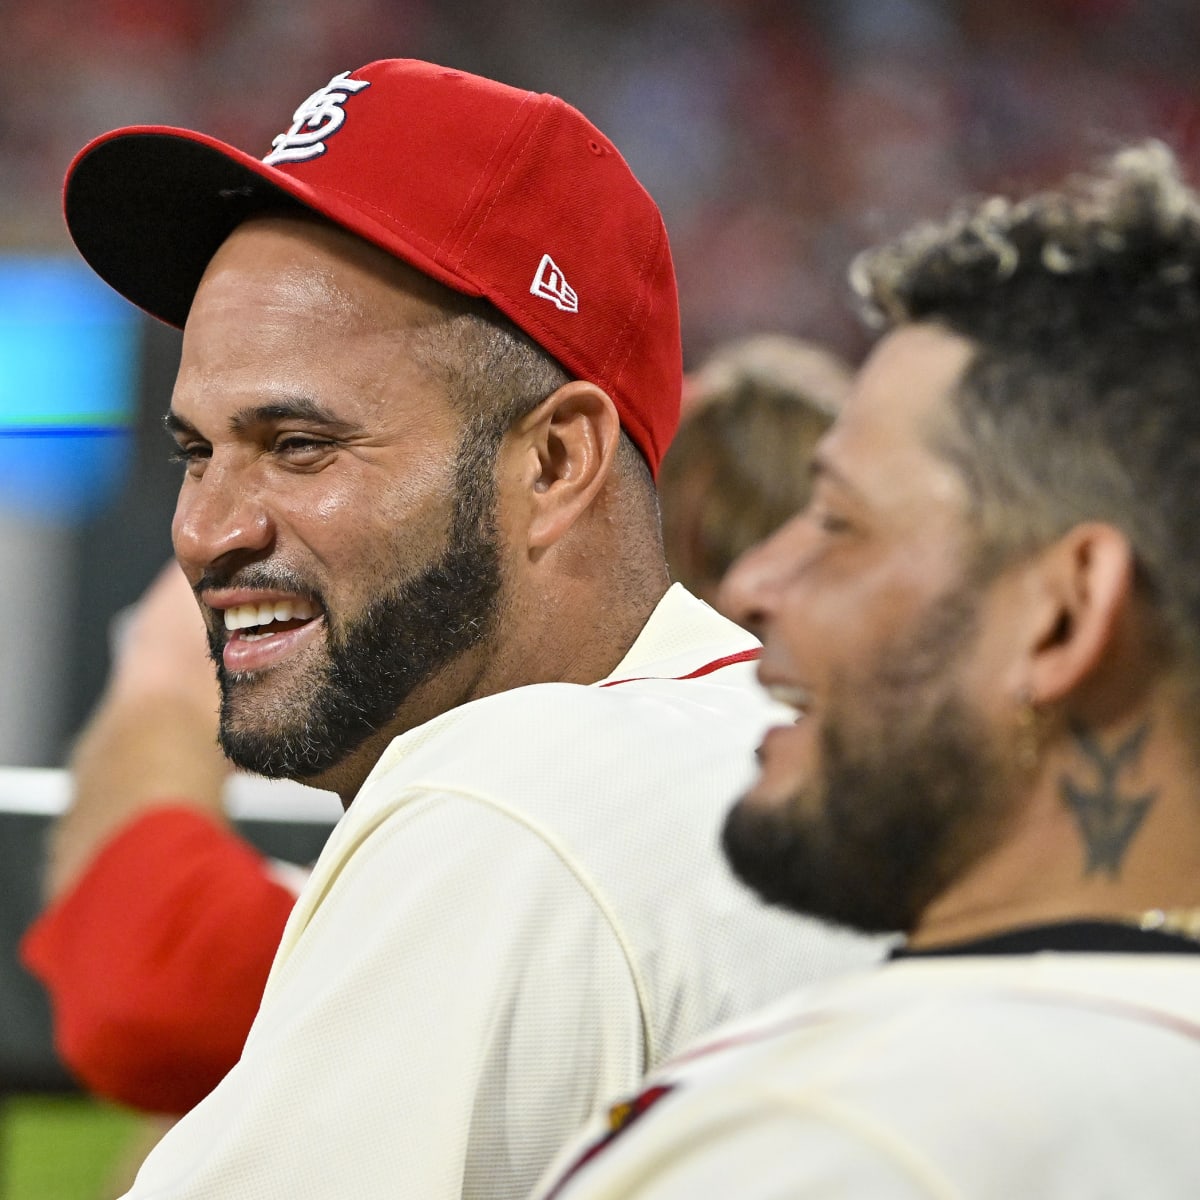 July 2018: St. Louis Cardinals catcher Yadier Molina at Wrigley